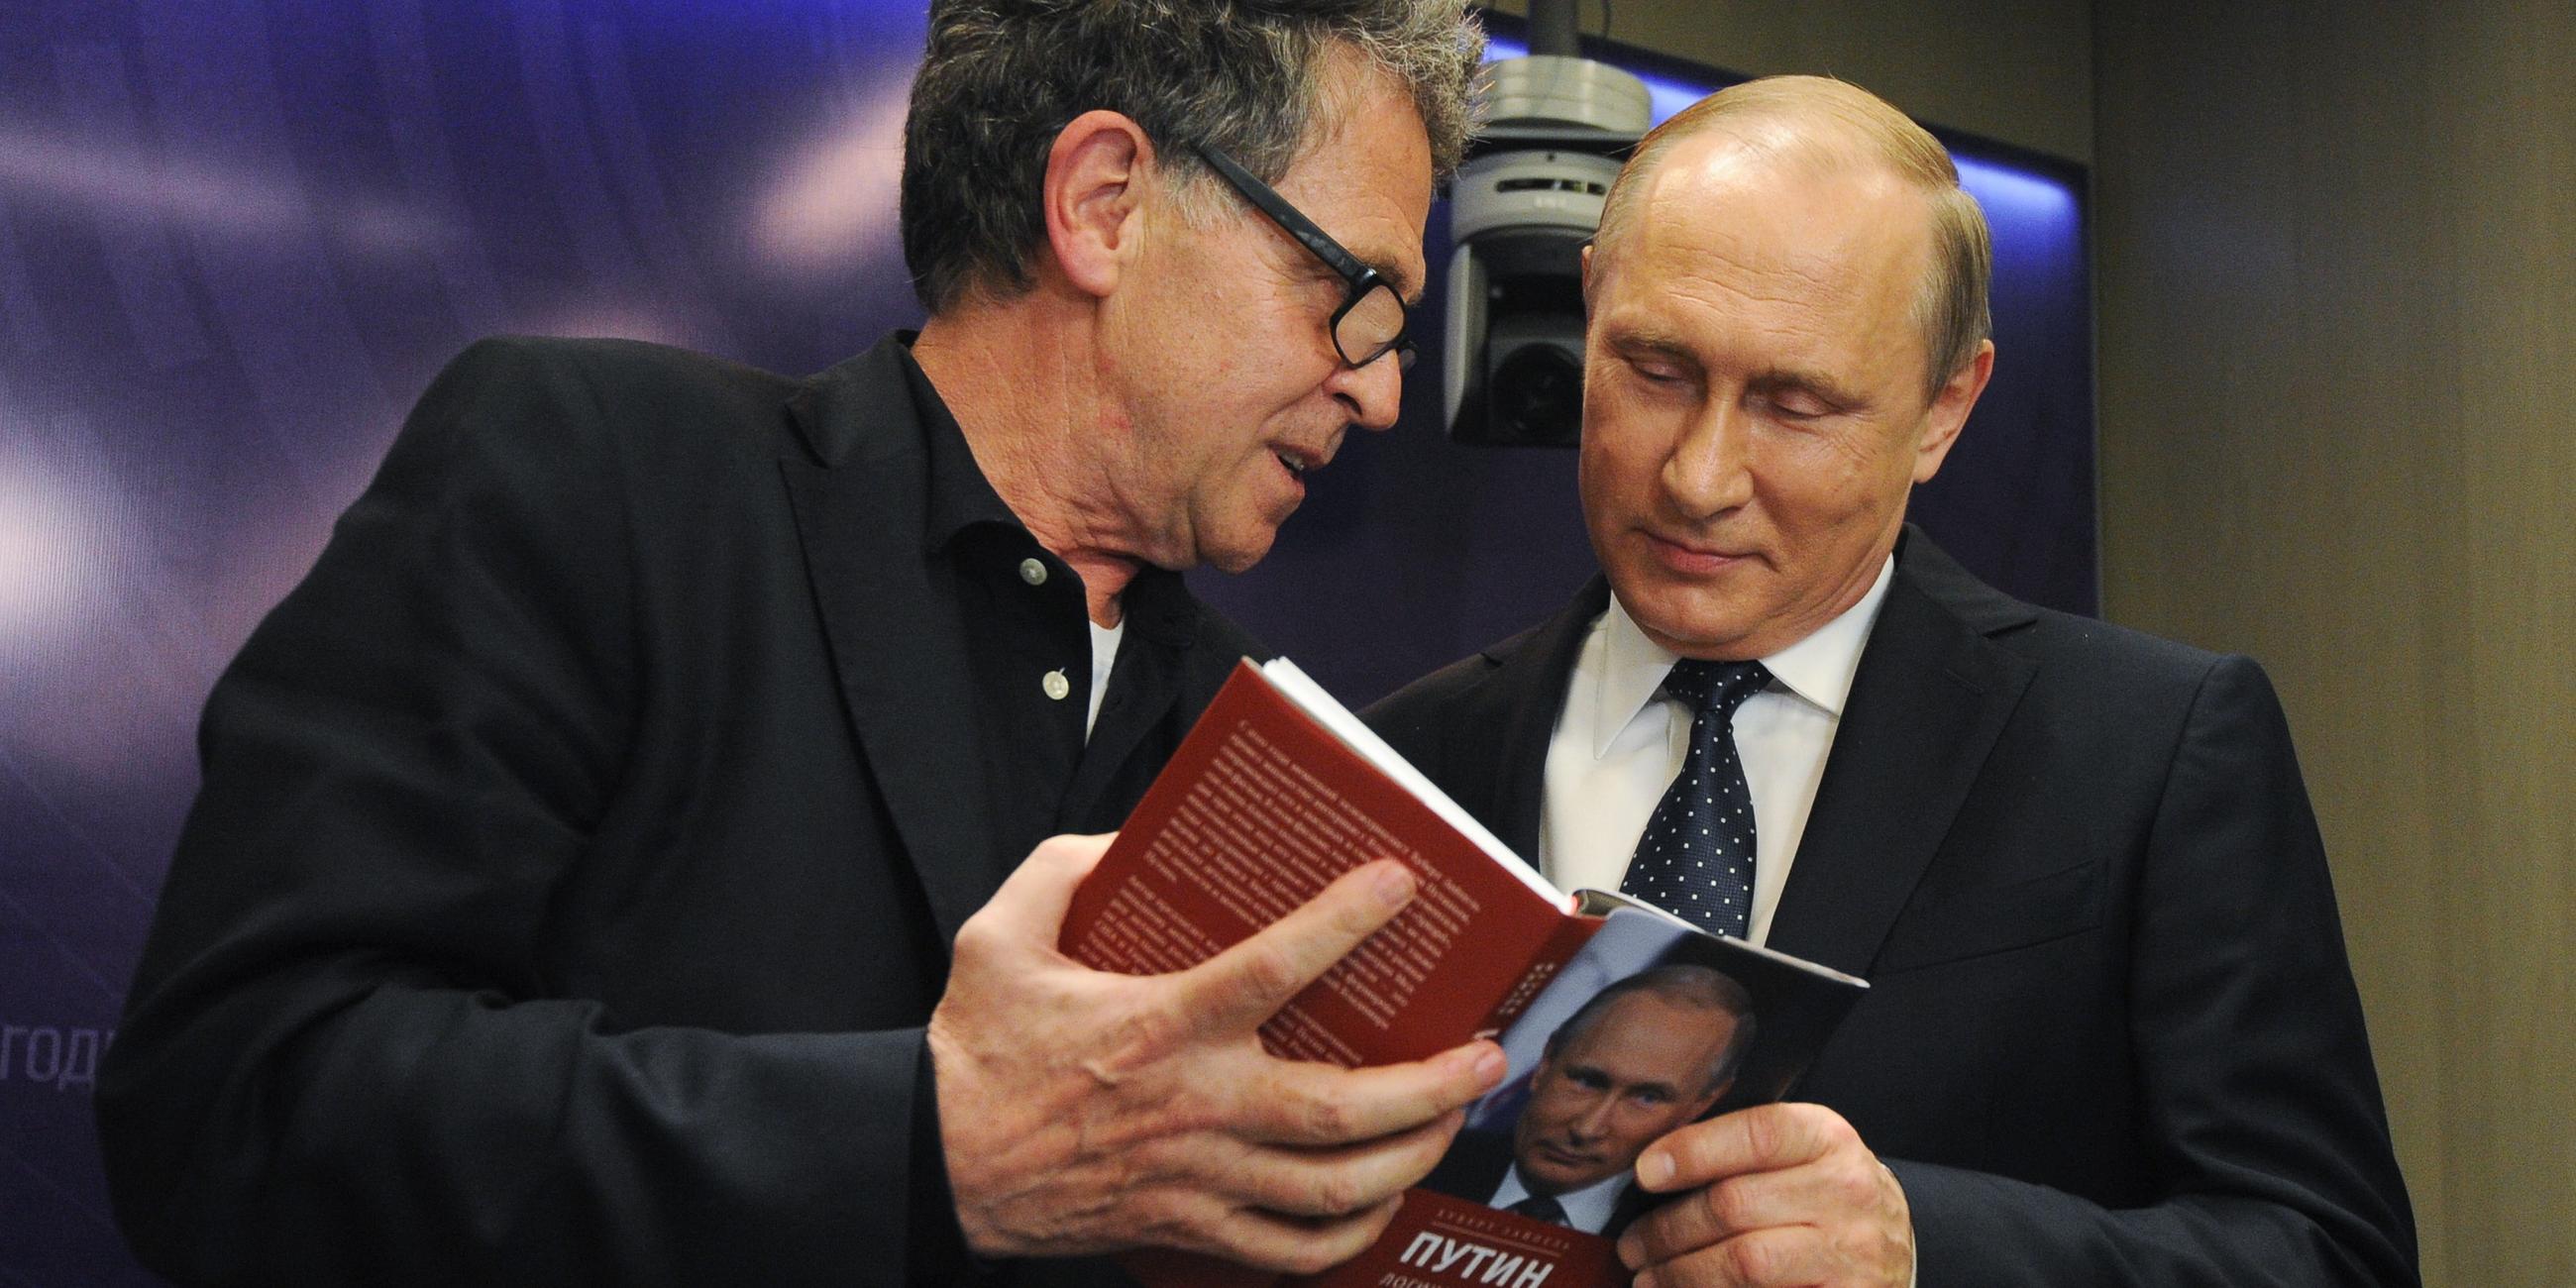 Buchautor Hubert Seipel mit Wladimir Putin